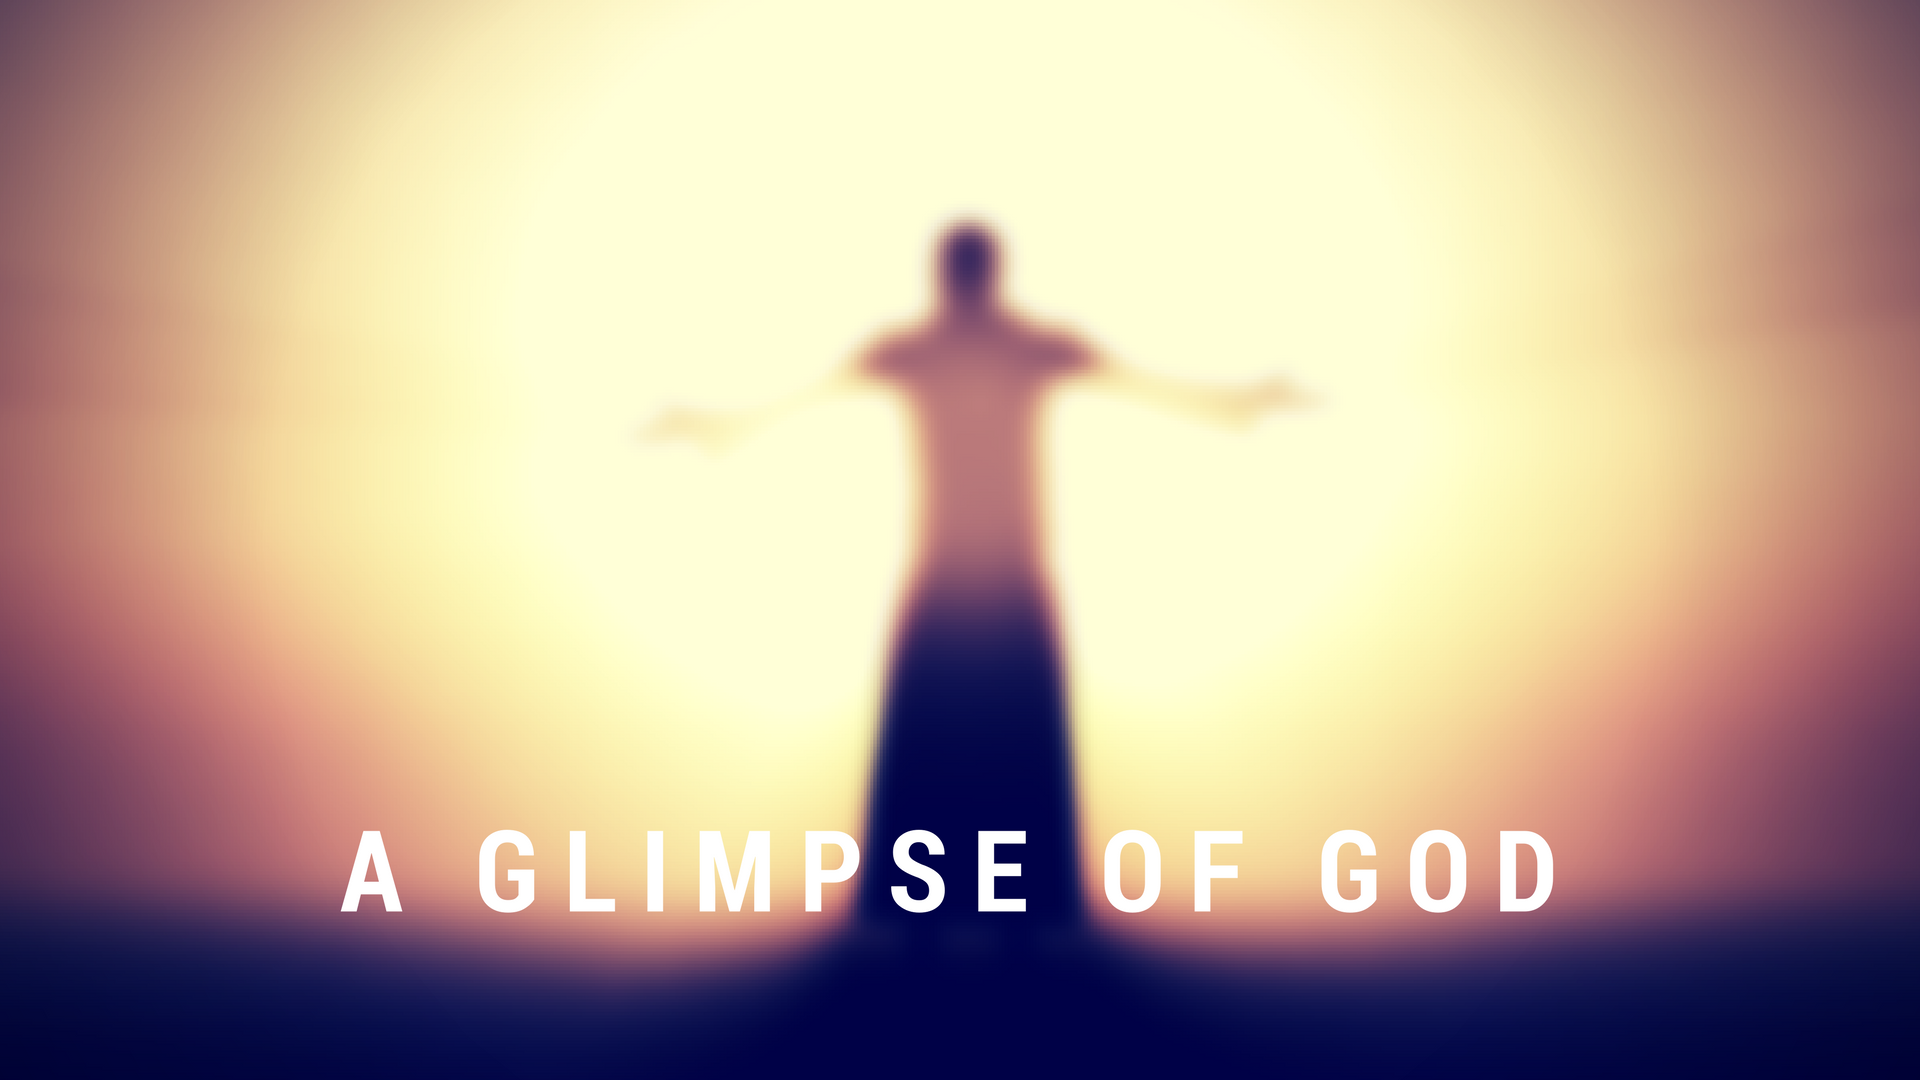 "A Glimpse of God"